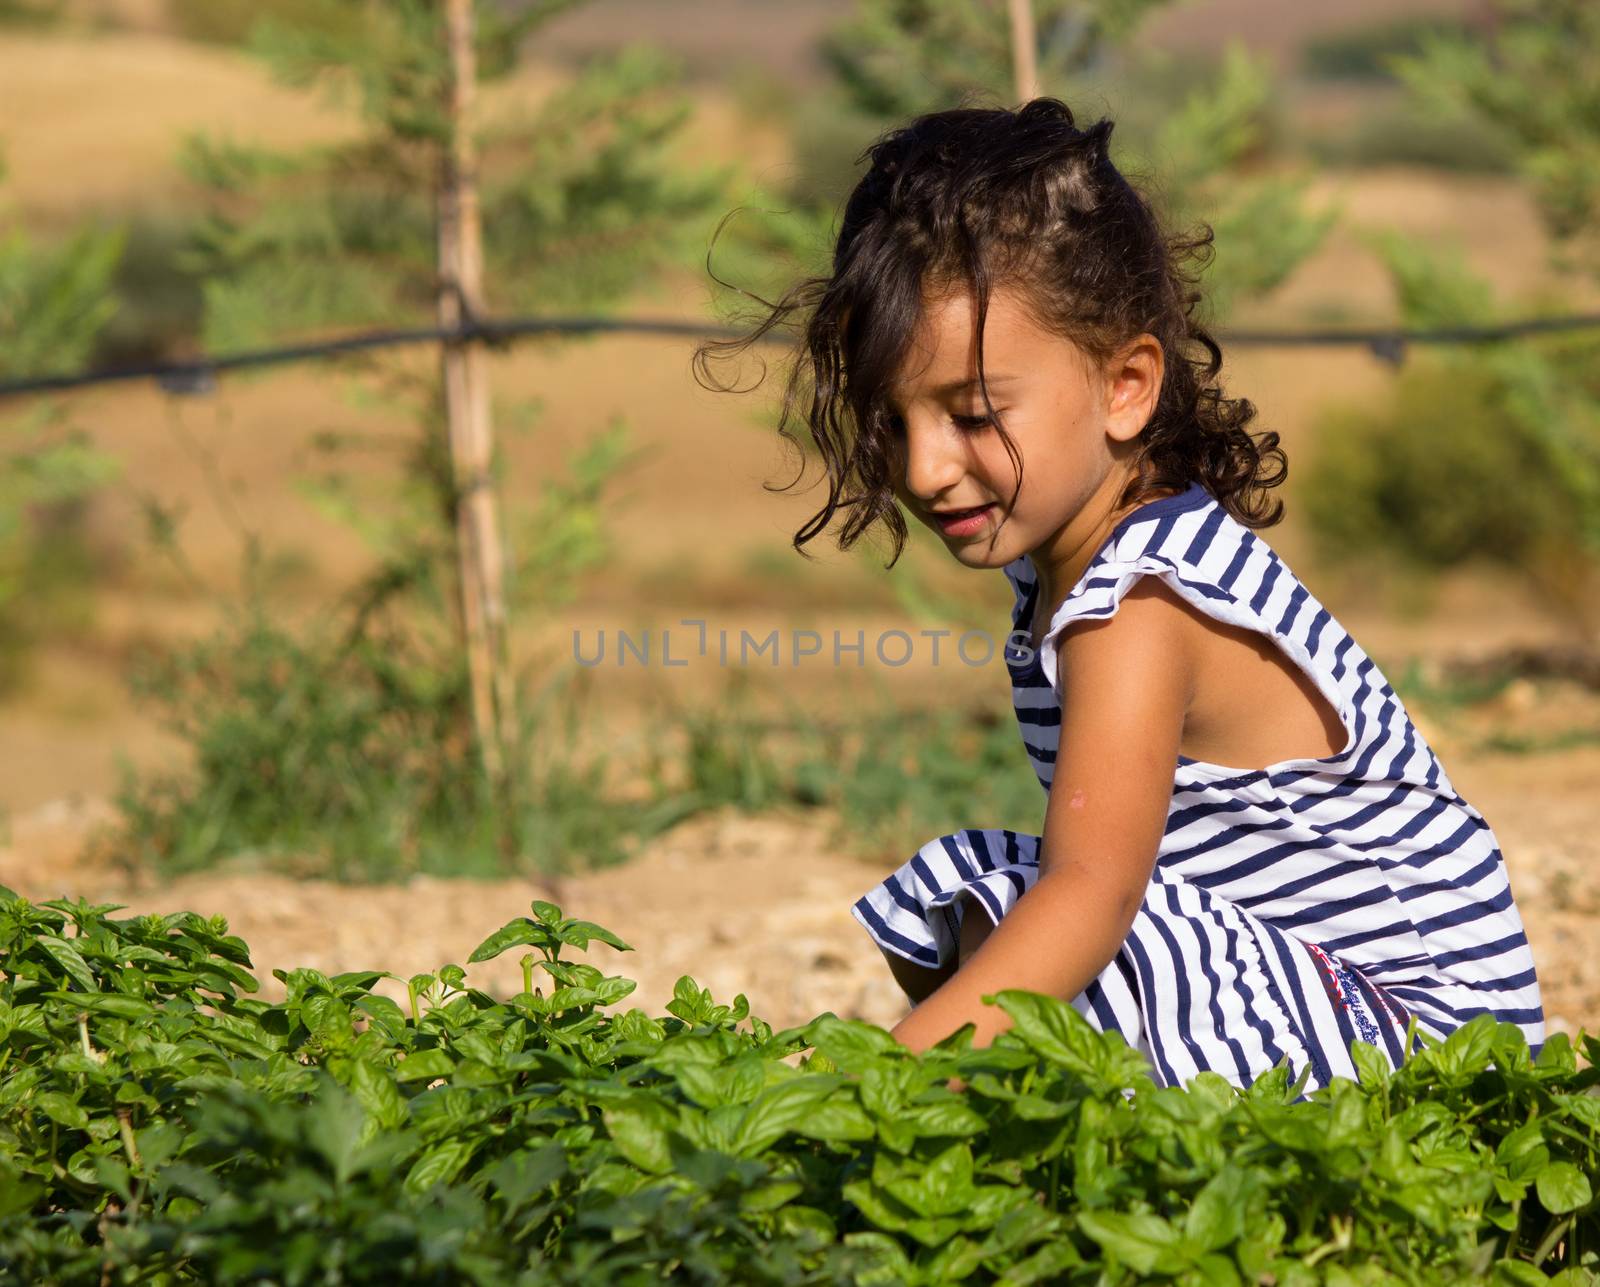 Little girl in garden by goghy73